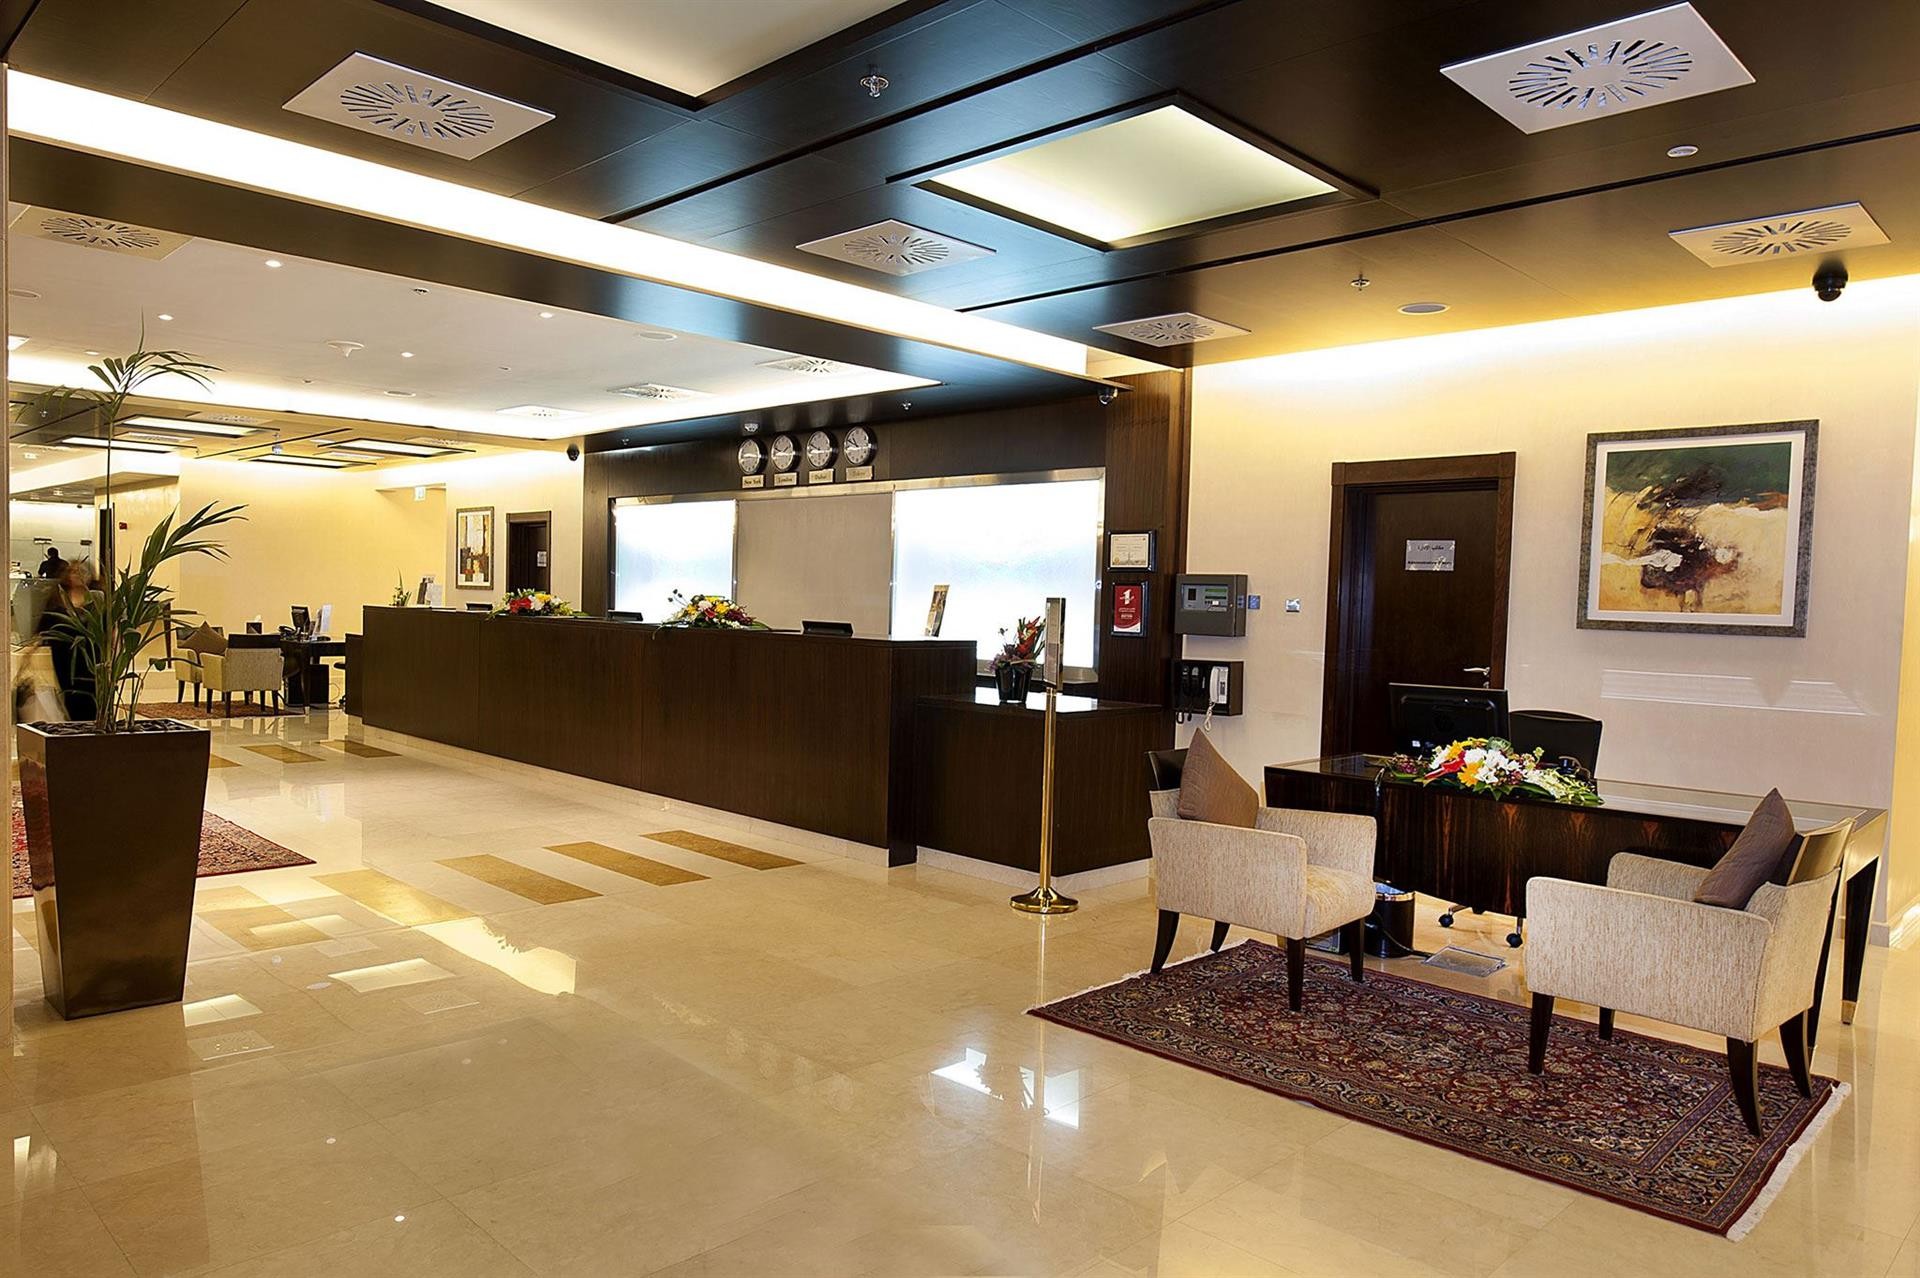 Al barsha heights. Mercure Hotel Suites Apartments Дубай. Mercure Hotel Apartments Dubai Barsha. Mercure Hotel Suites & Apartments Barsha heights. Mercure Hotel Apartments Dubai Barsha heights Apartment (Аль-барша).